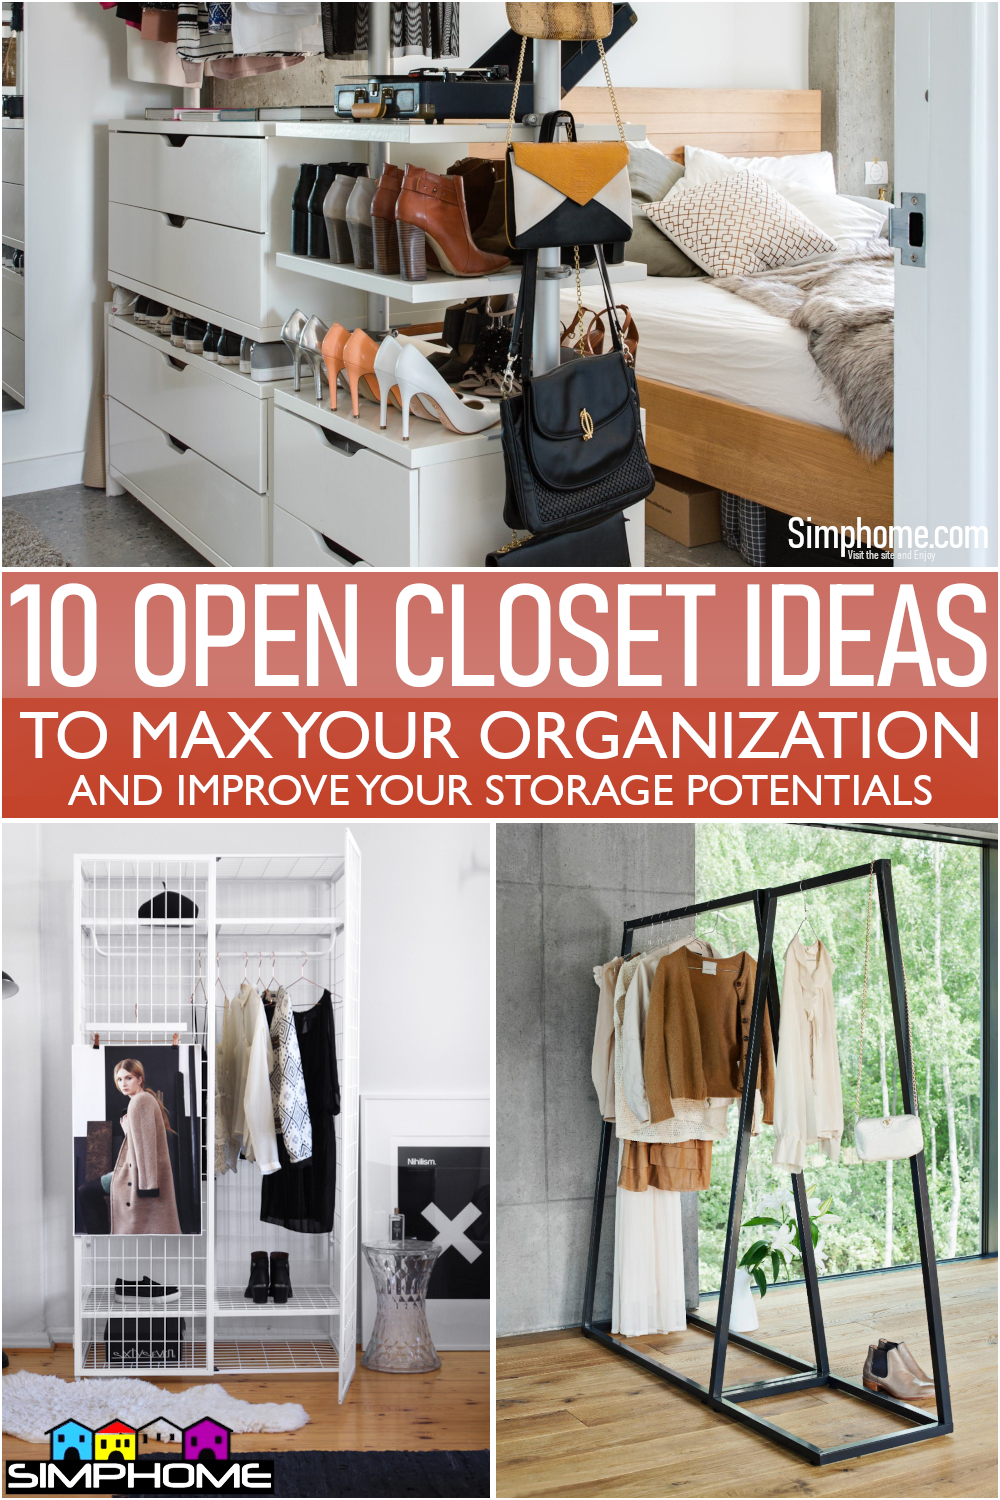 This is poster for Open Closet Ideas via Simphome.com